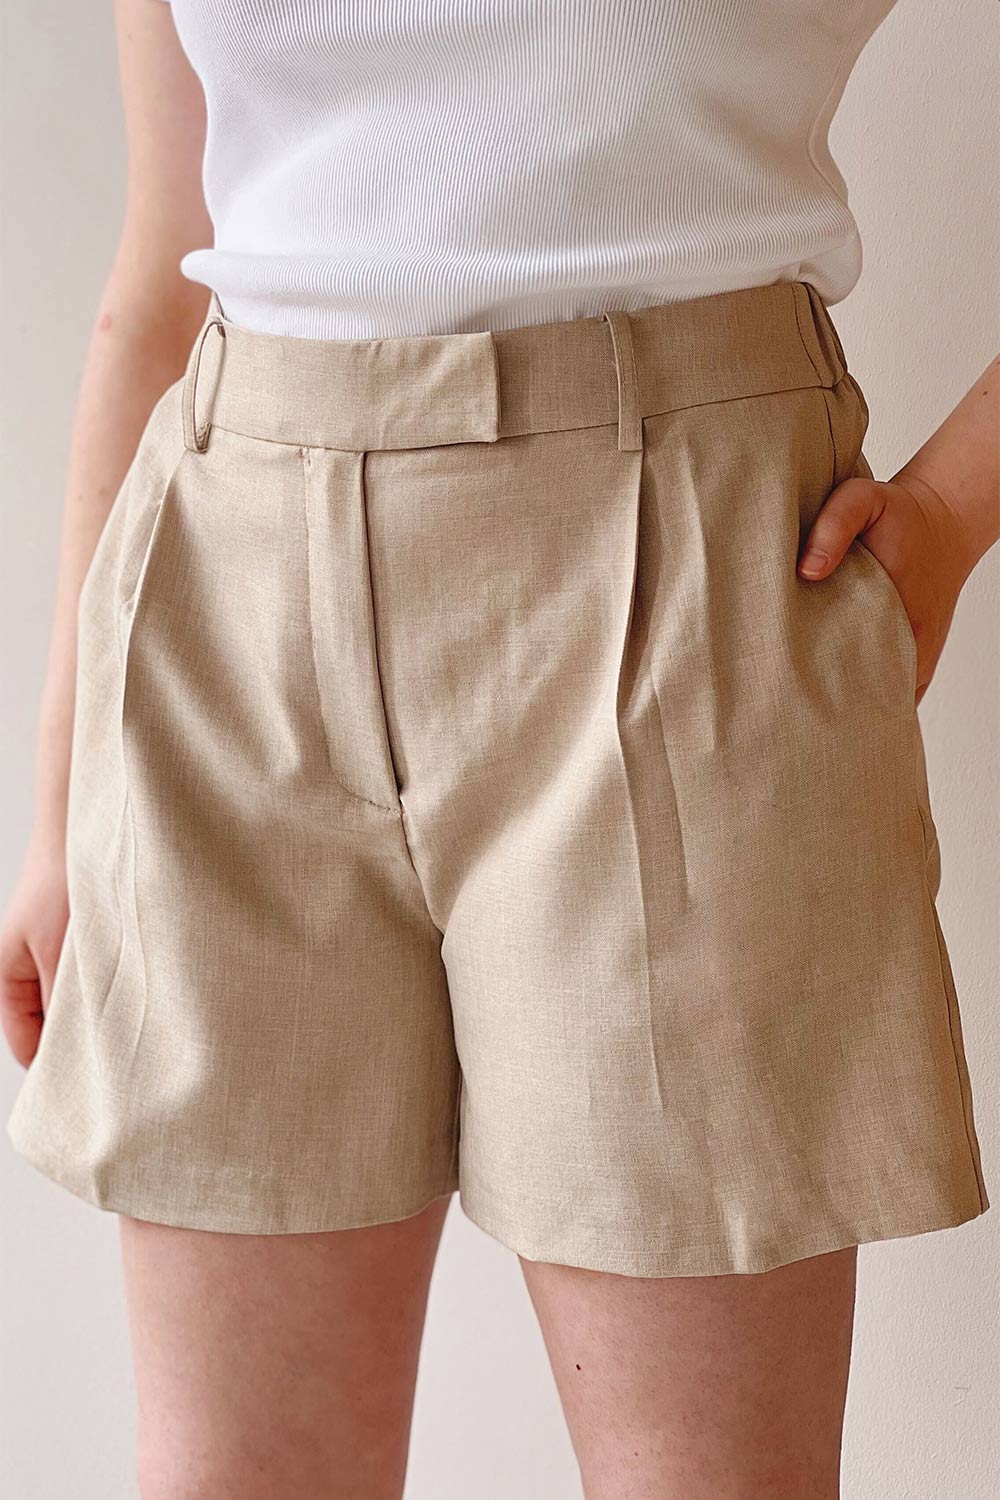 Kunga Beige High-Waisted Shorts w/ Pockets